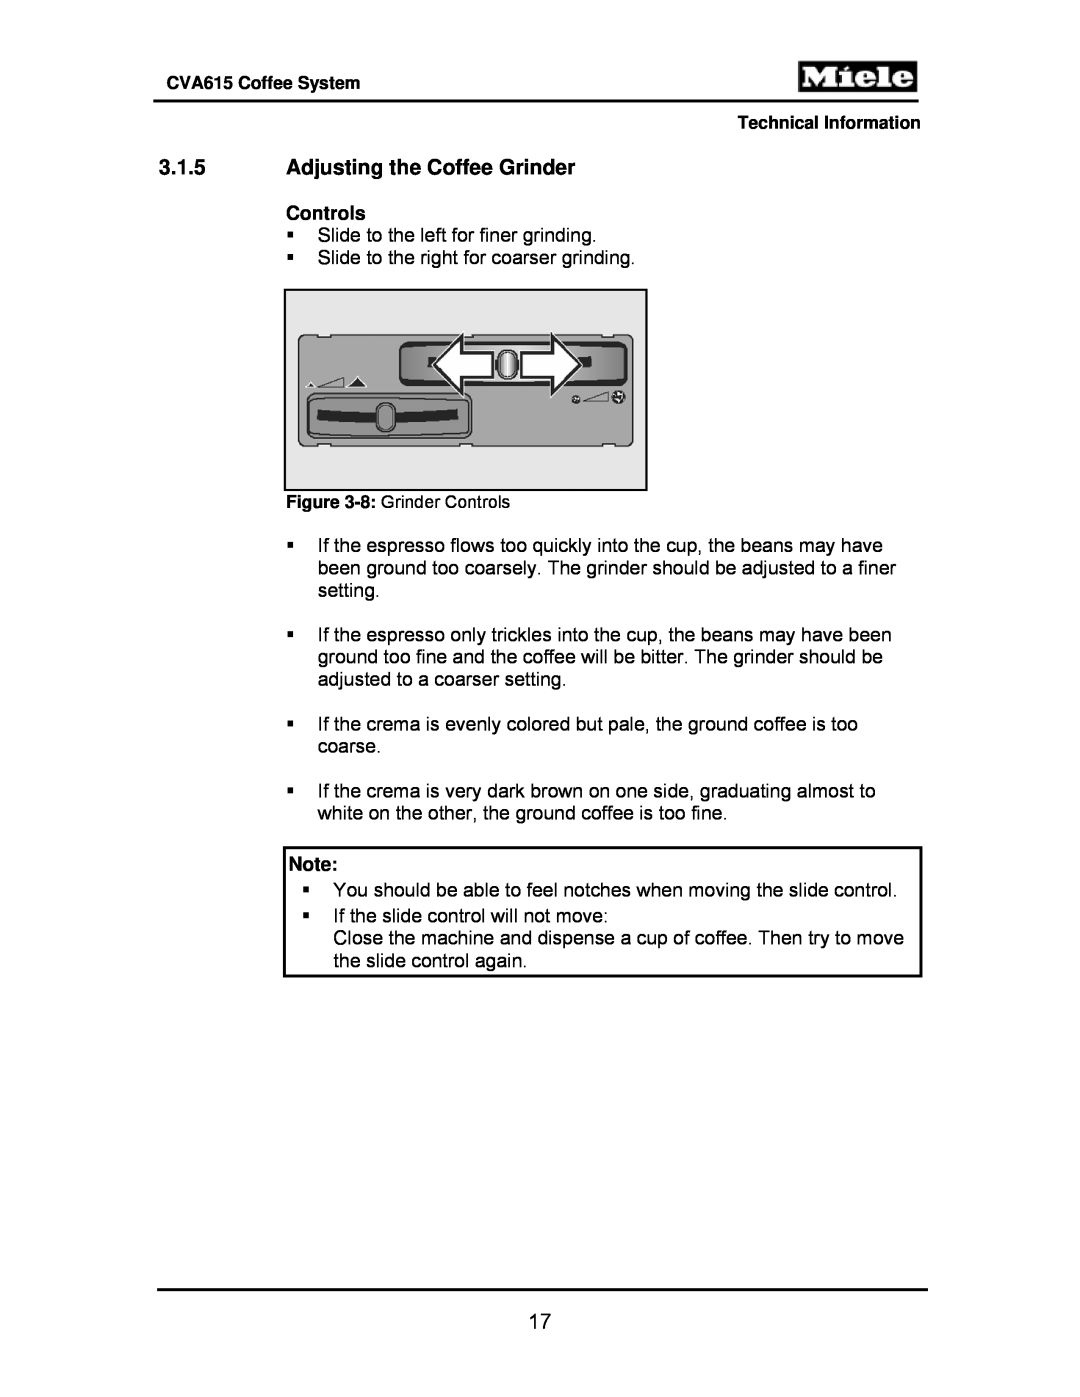 Miele CVA615 manual 3.1.5Adjusting the Coffee Grinder, Controls 